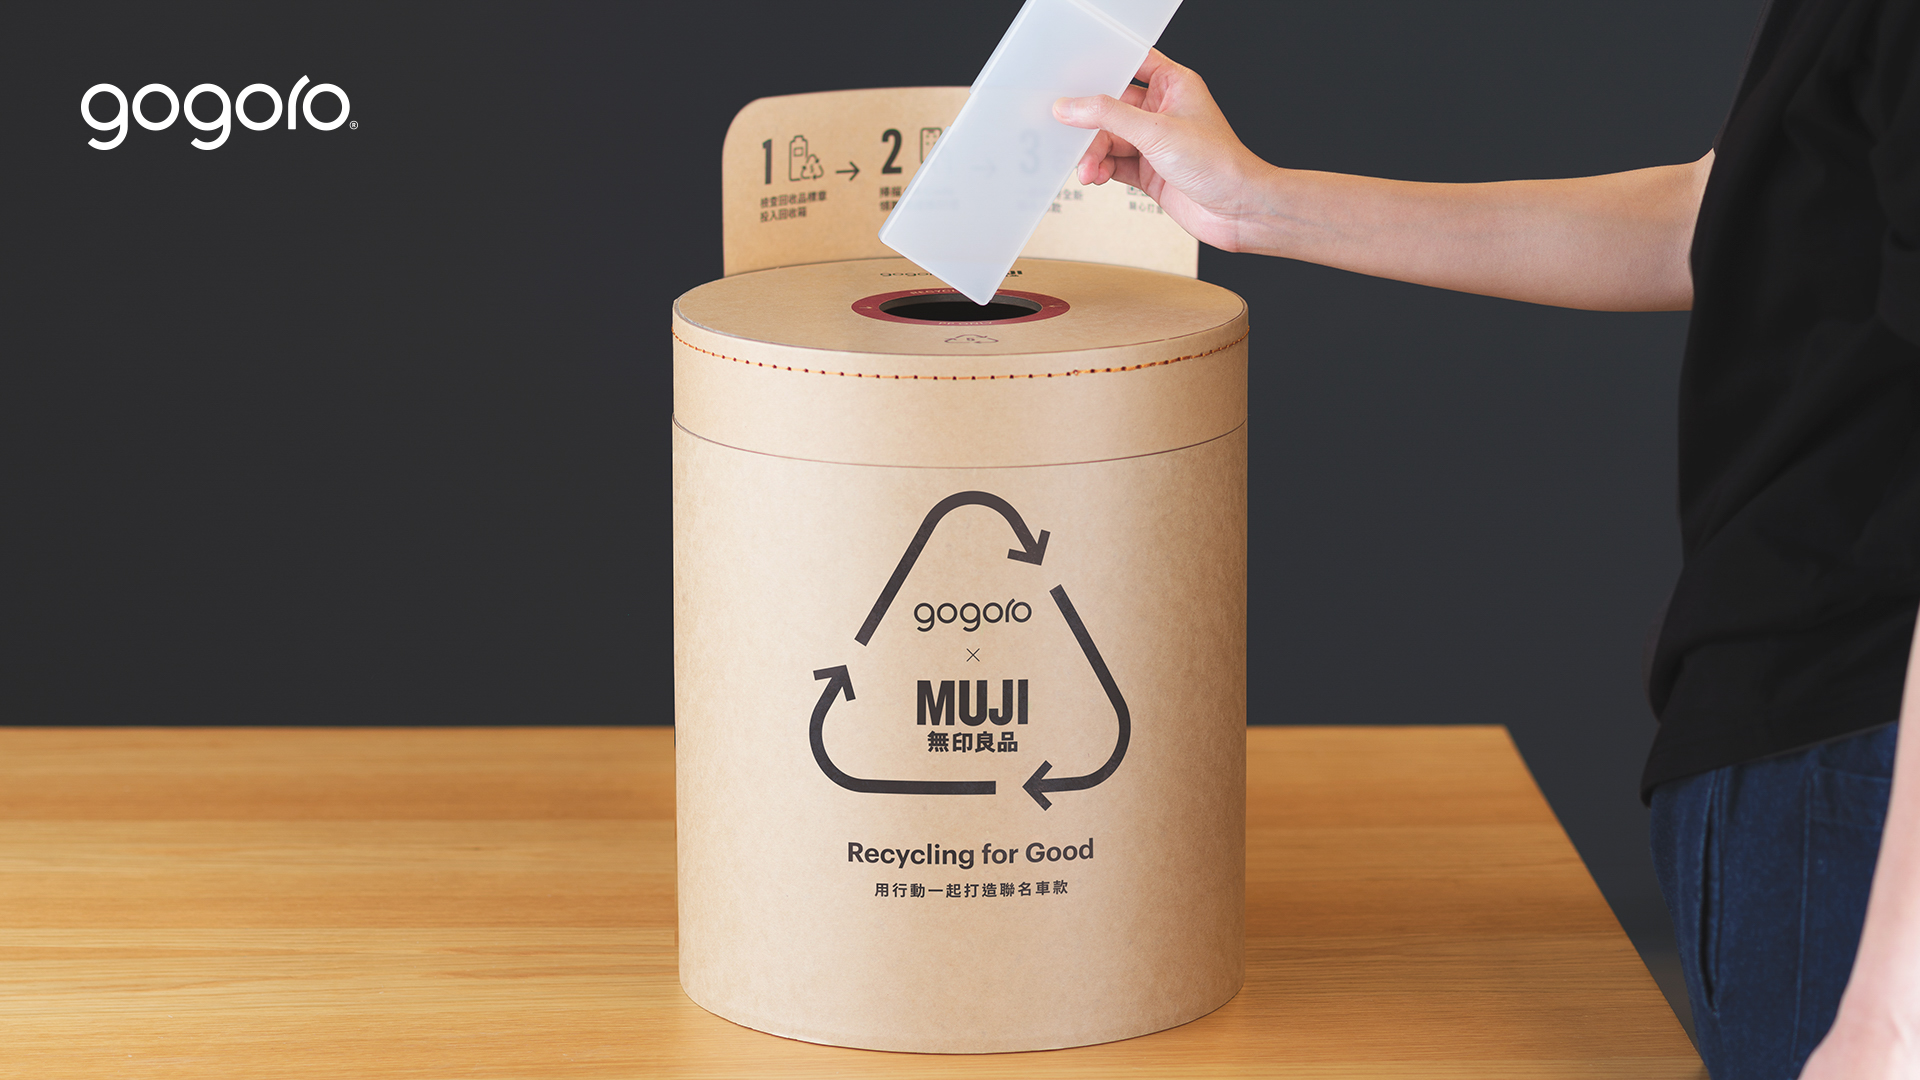 Gogoro ｘ MUJI 無印良品合推「Recycling for Good」全台永續循環行動